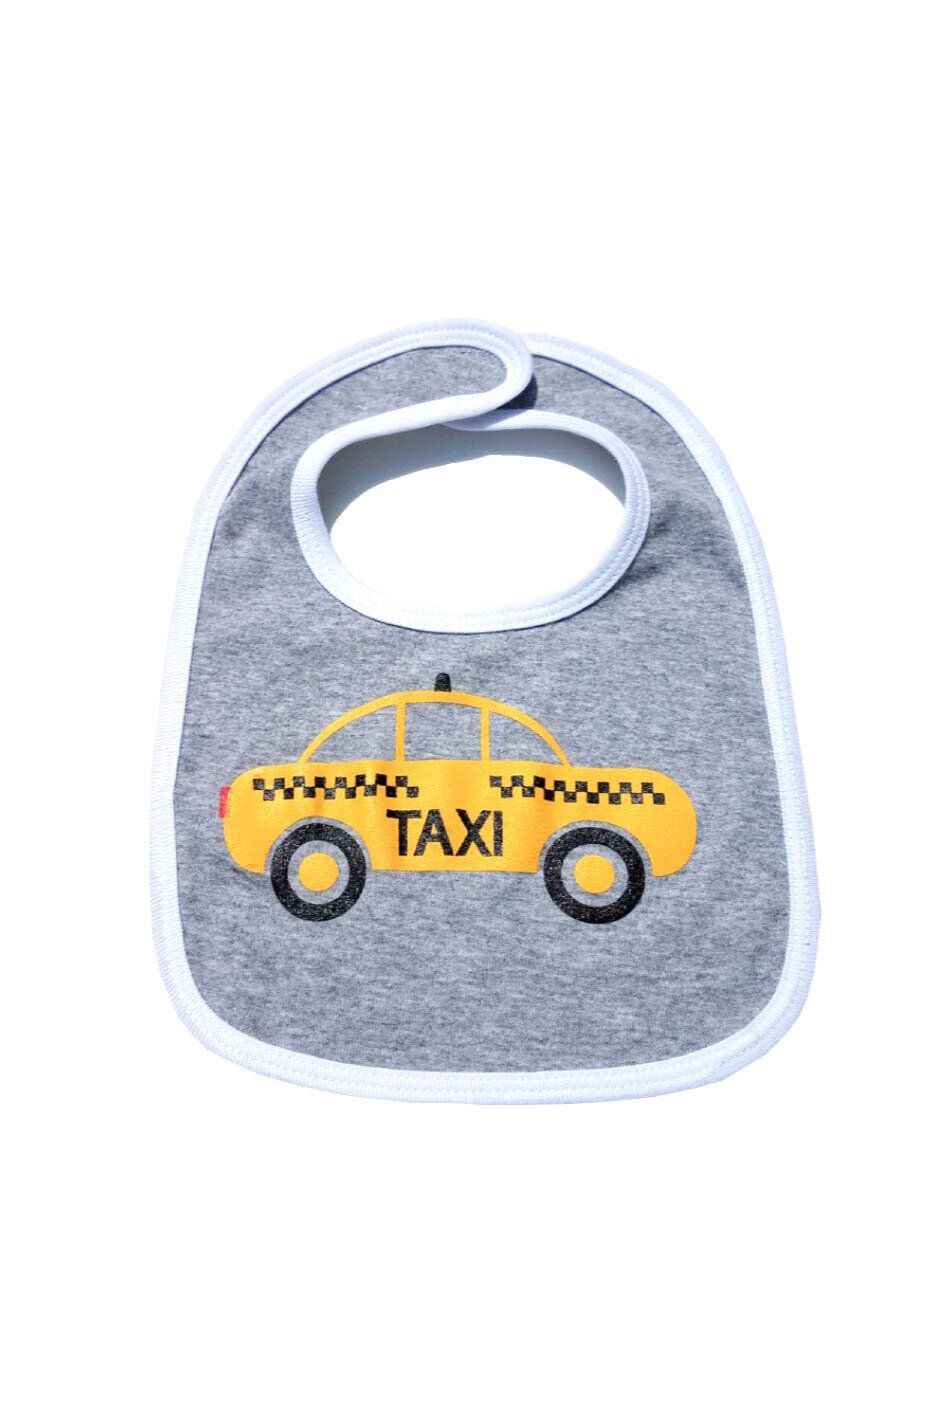 yellow-taxi-babies-bib-grey.jpg